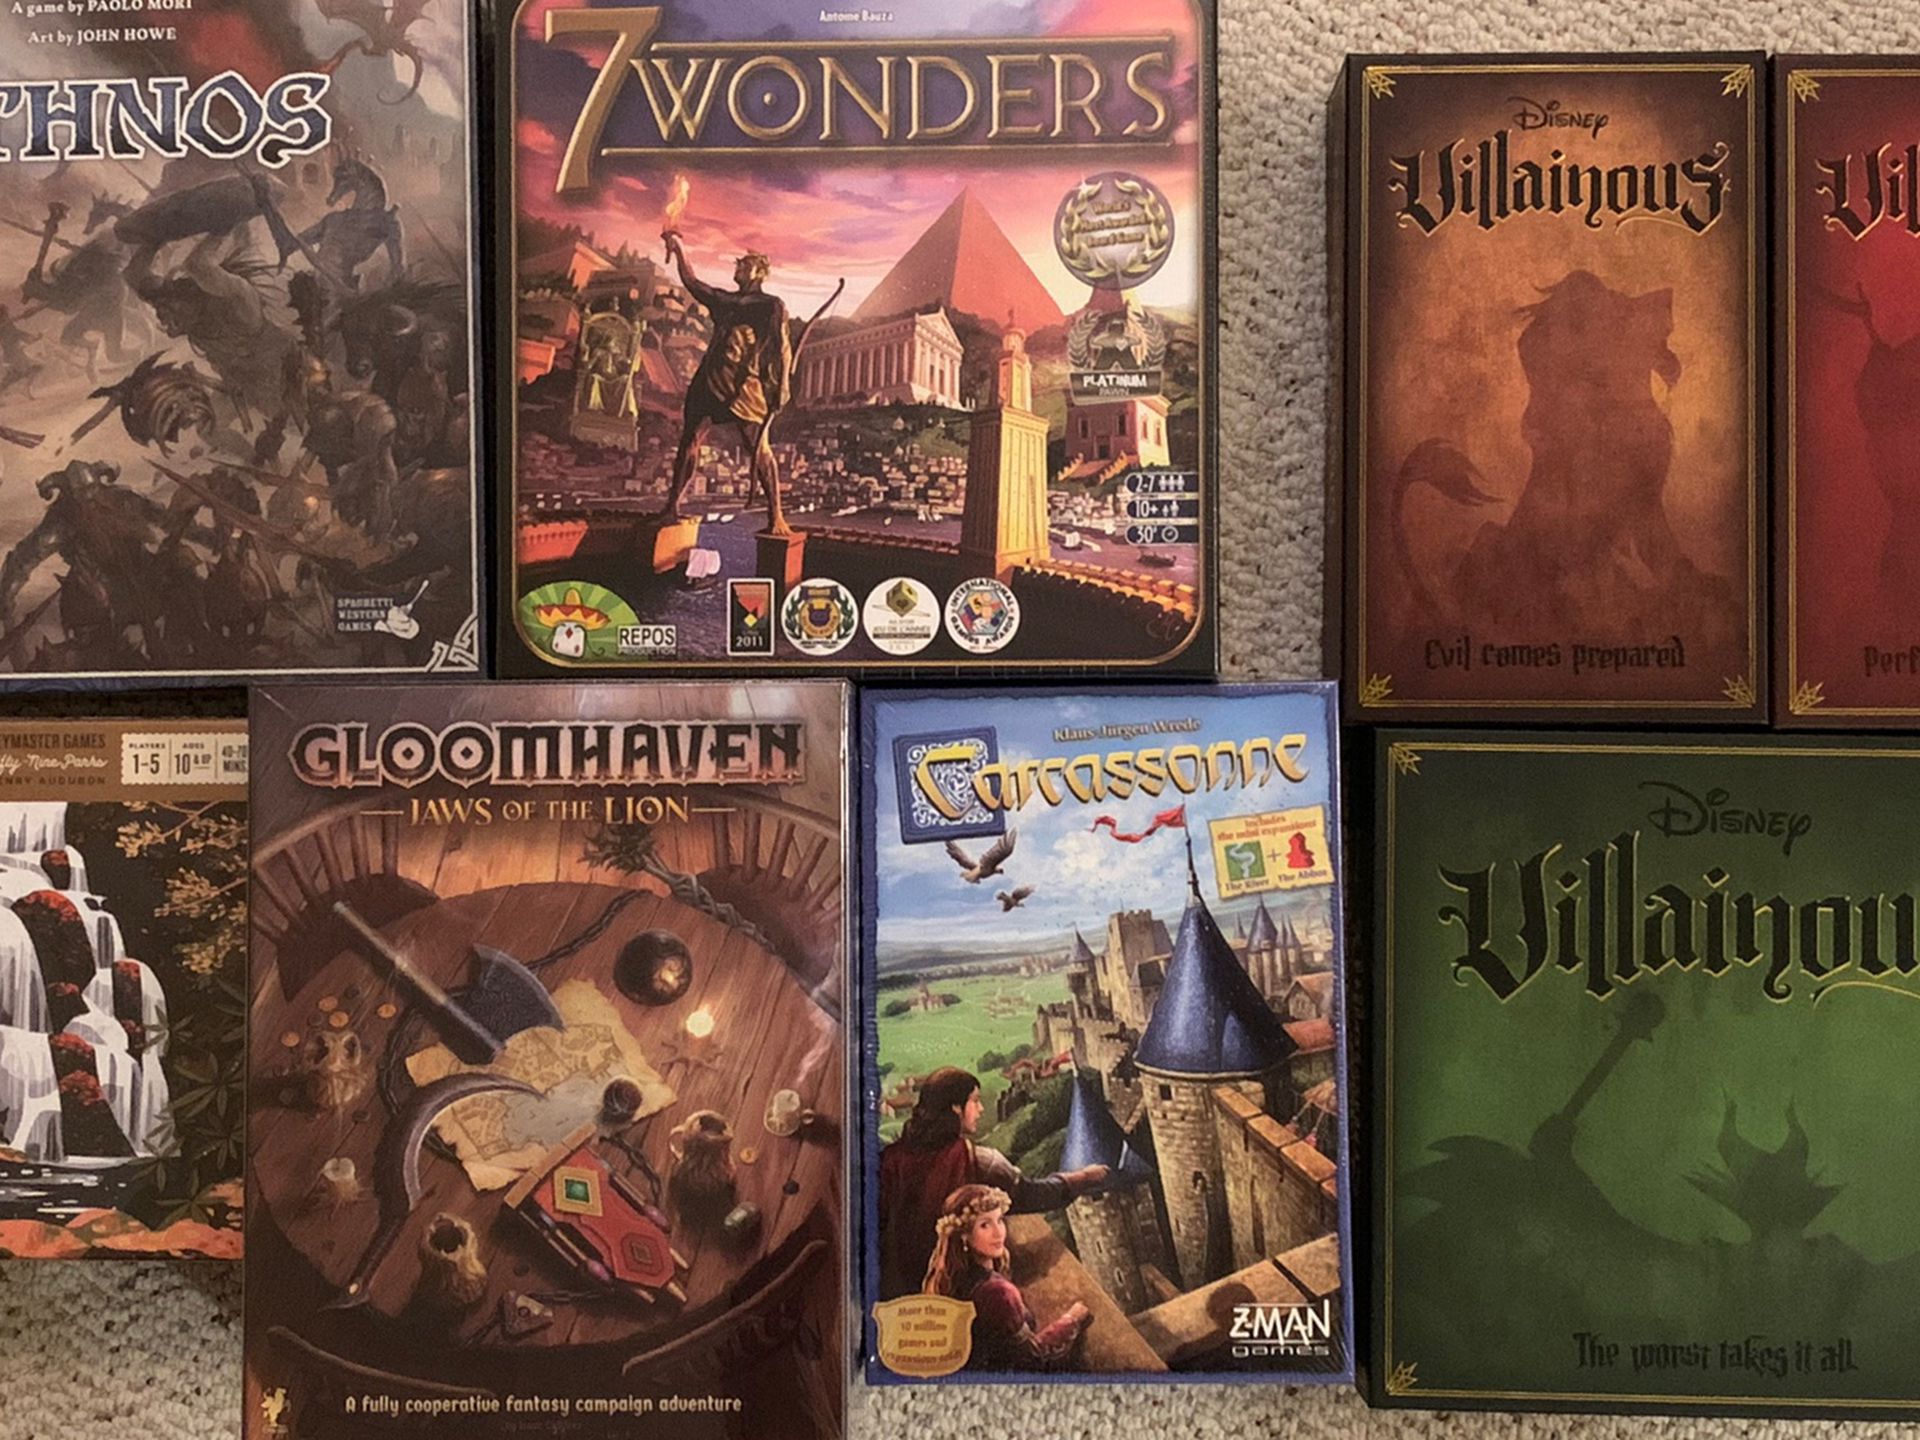 Board Games: GloomhavenJOTL, Parks,Villainous,7 Wonders,Ethnos,Carcassonne